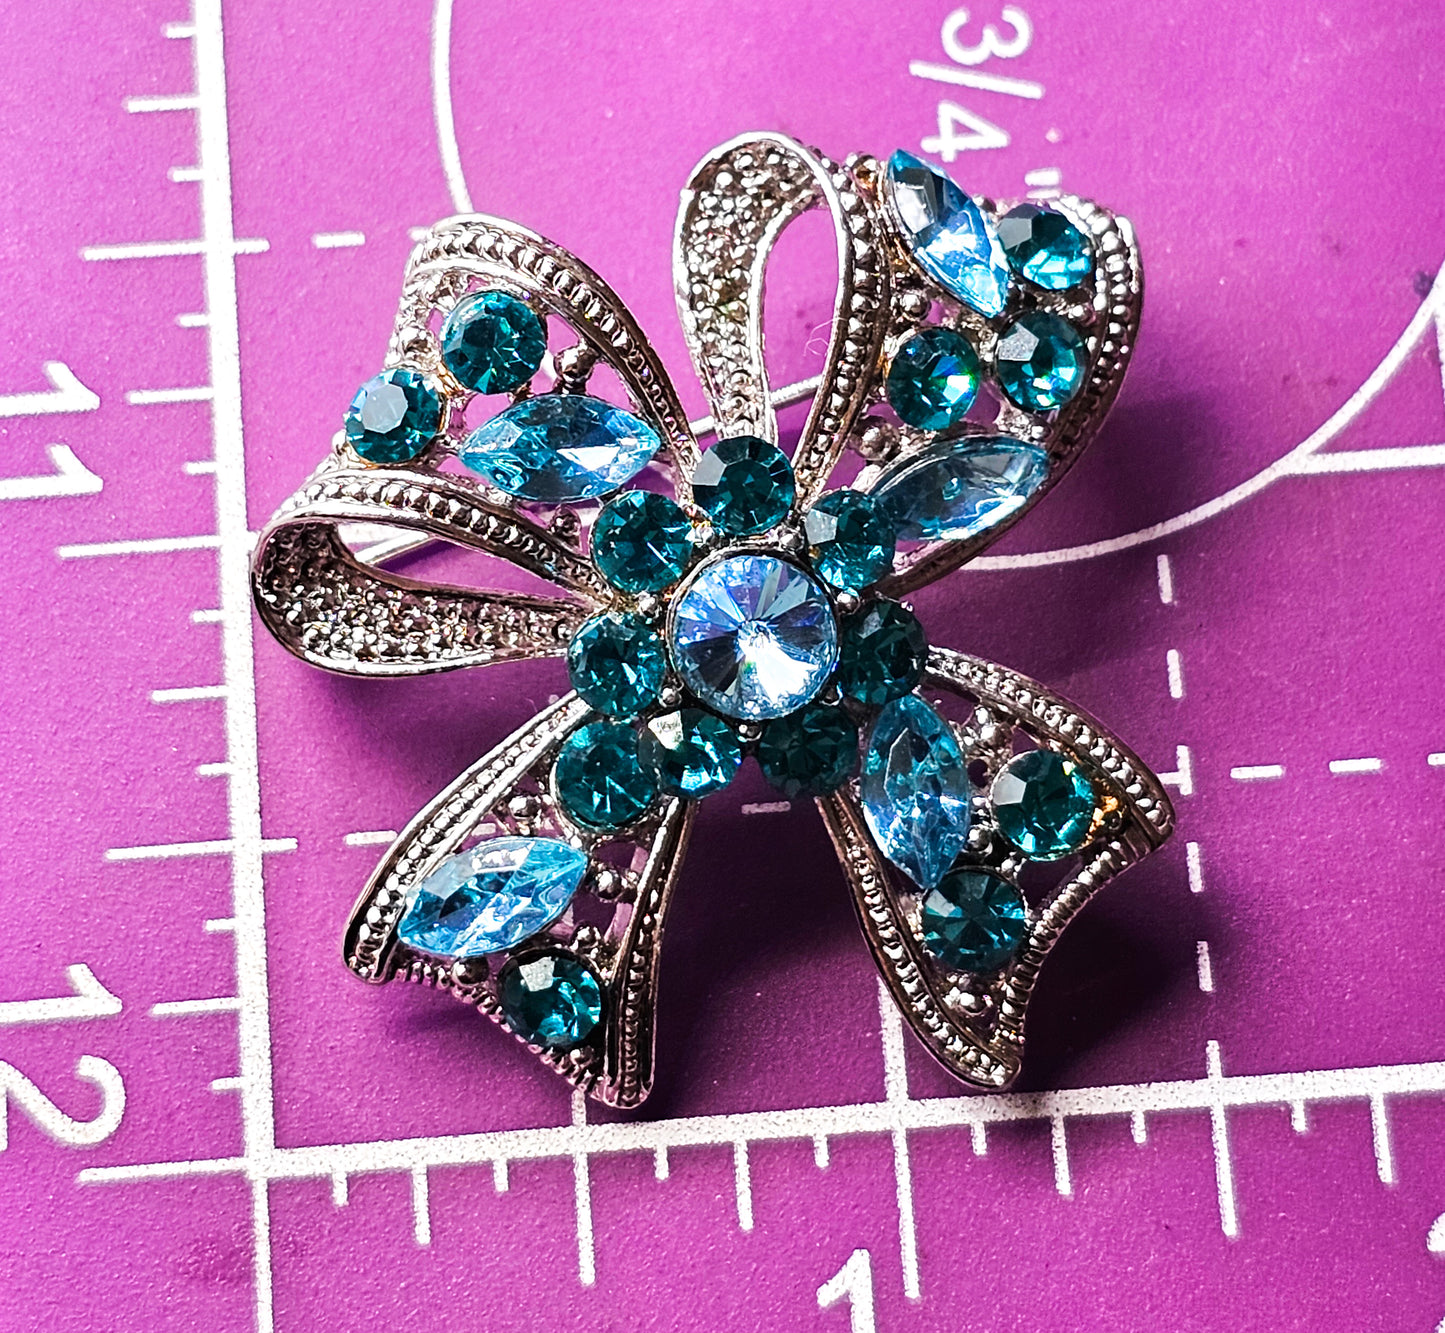 Teal and Aqua blue rhinestone silver toned vintage flower bow brooch